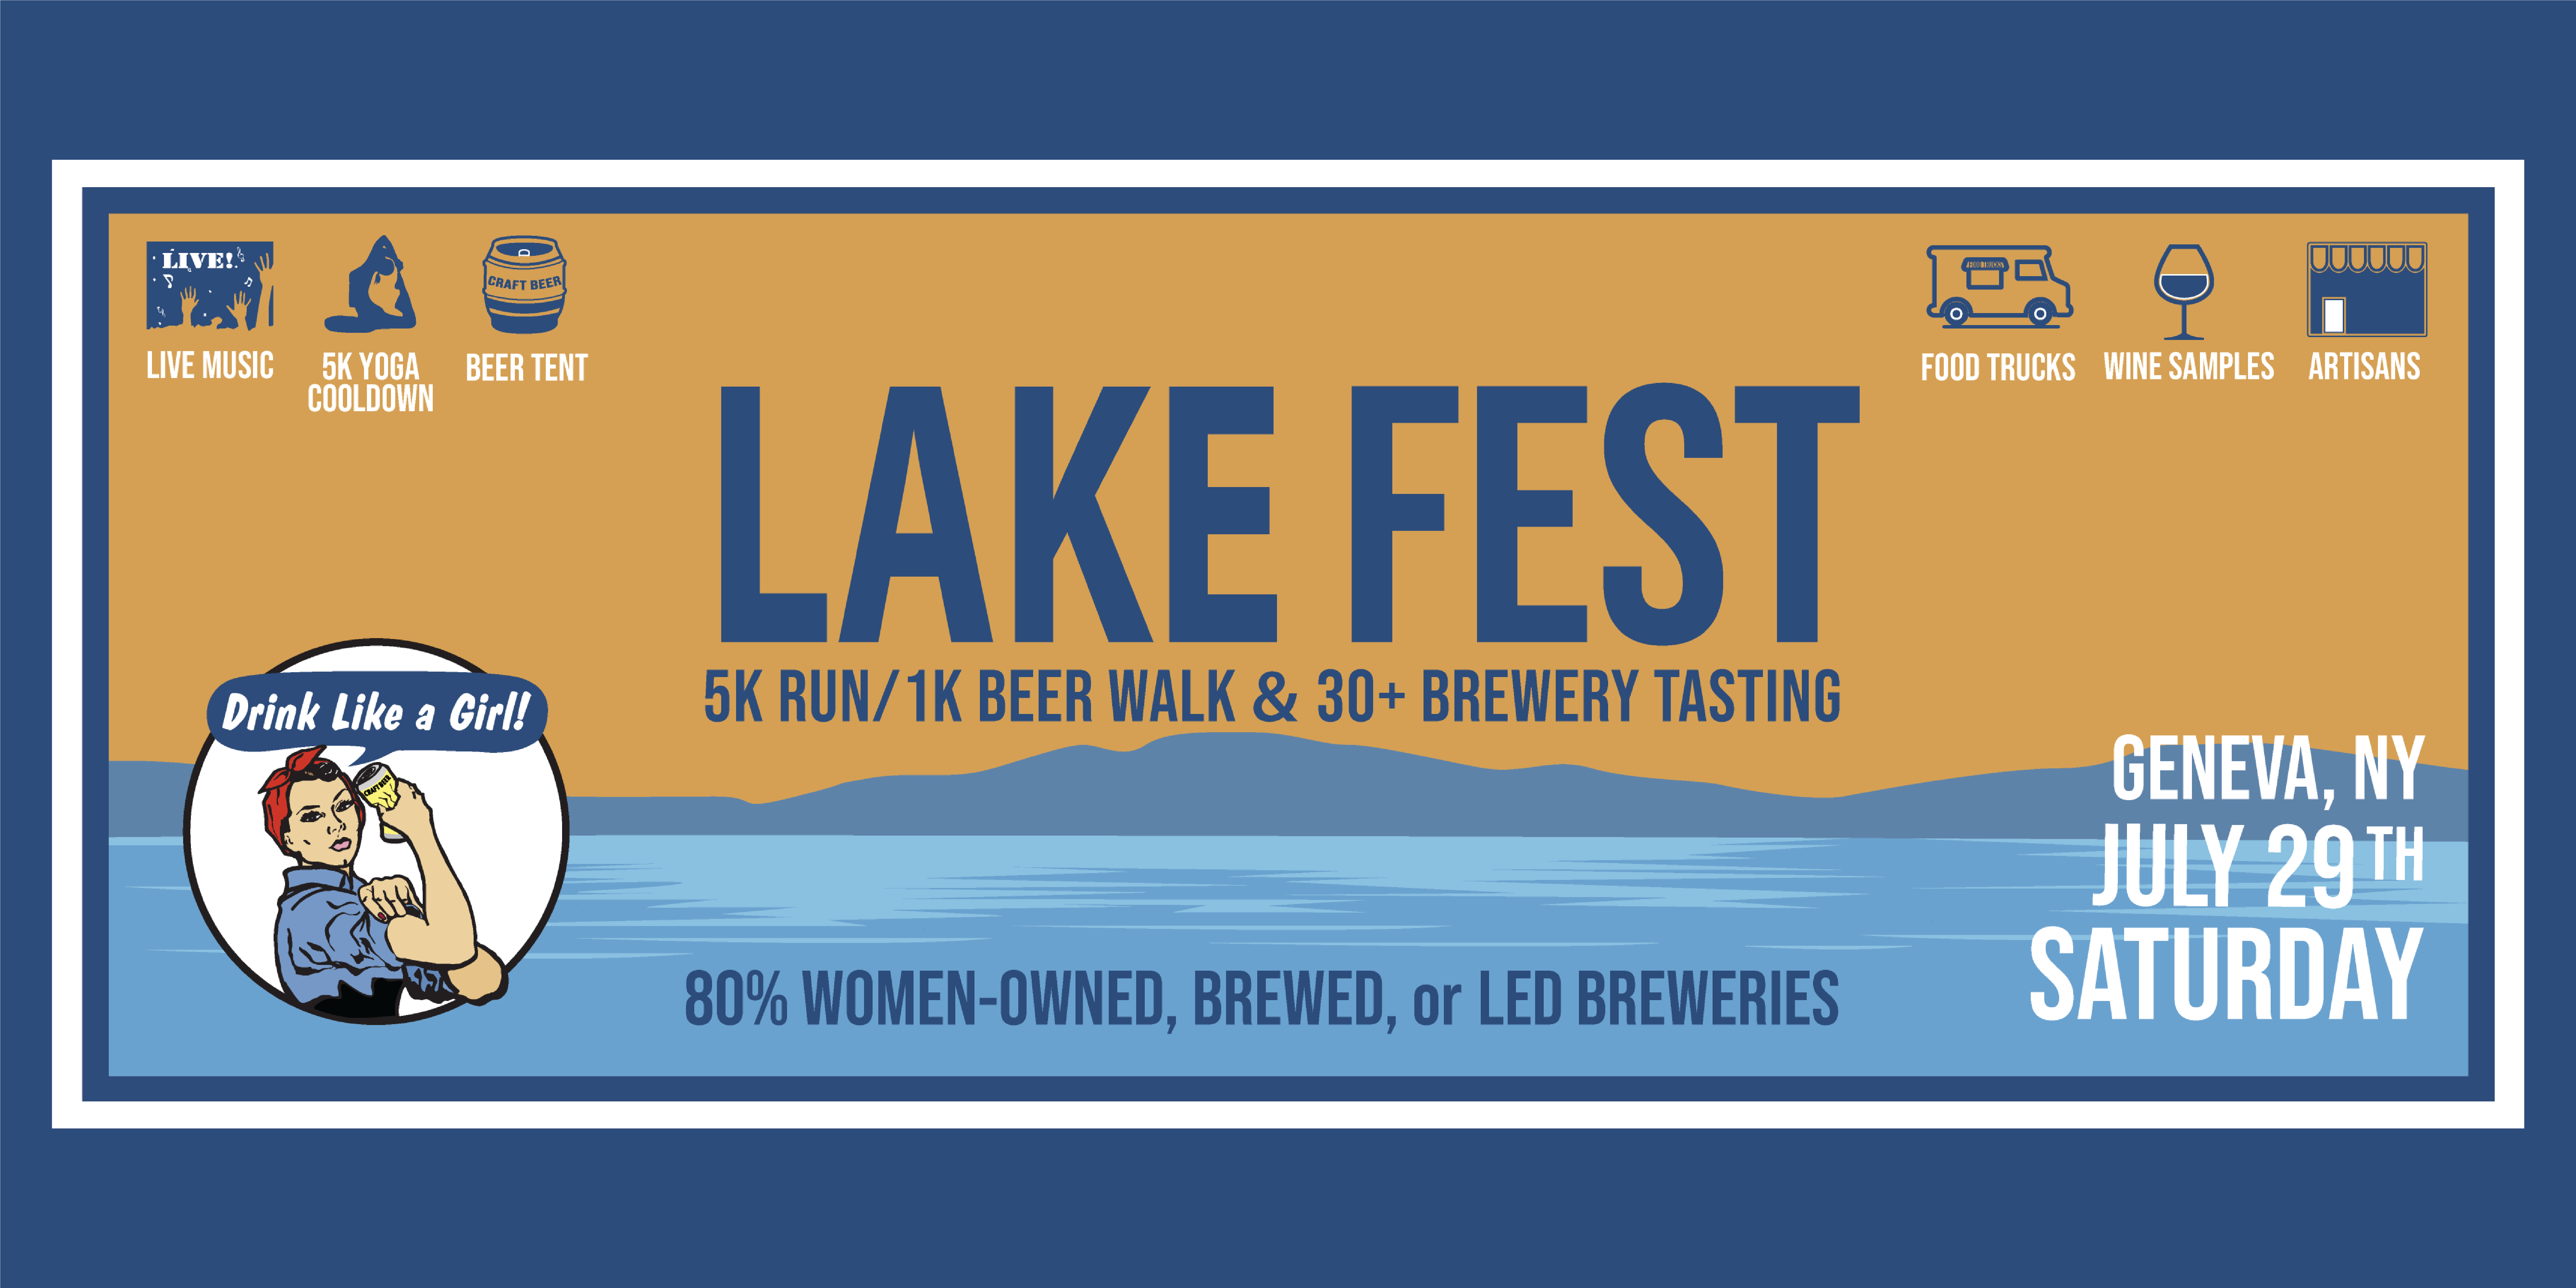 Drink Like a Girl Lake Fest banner image